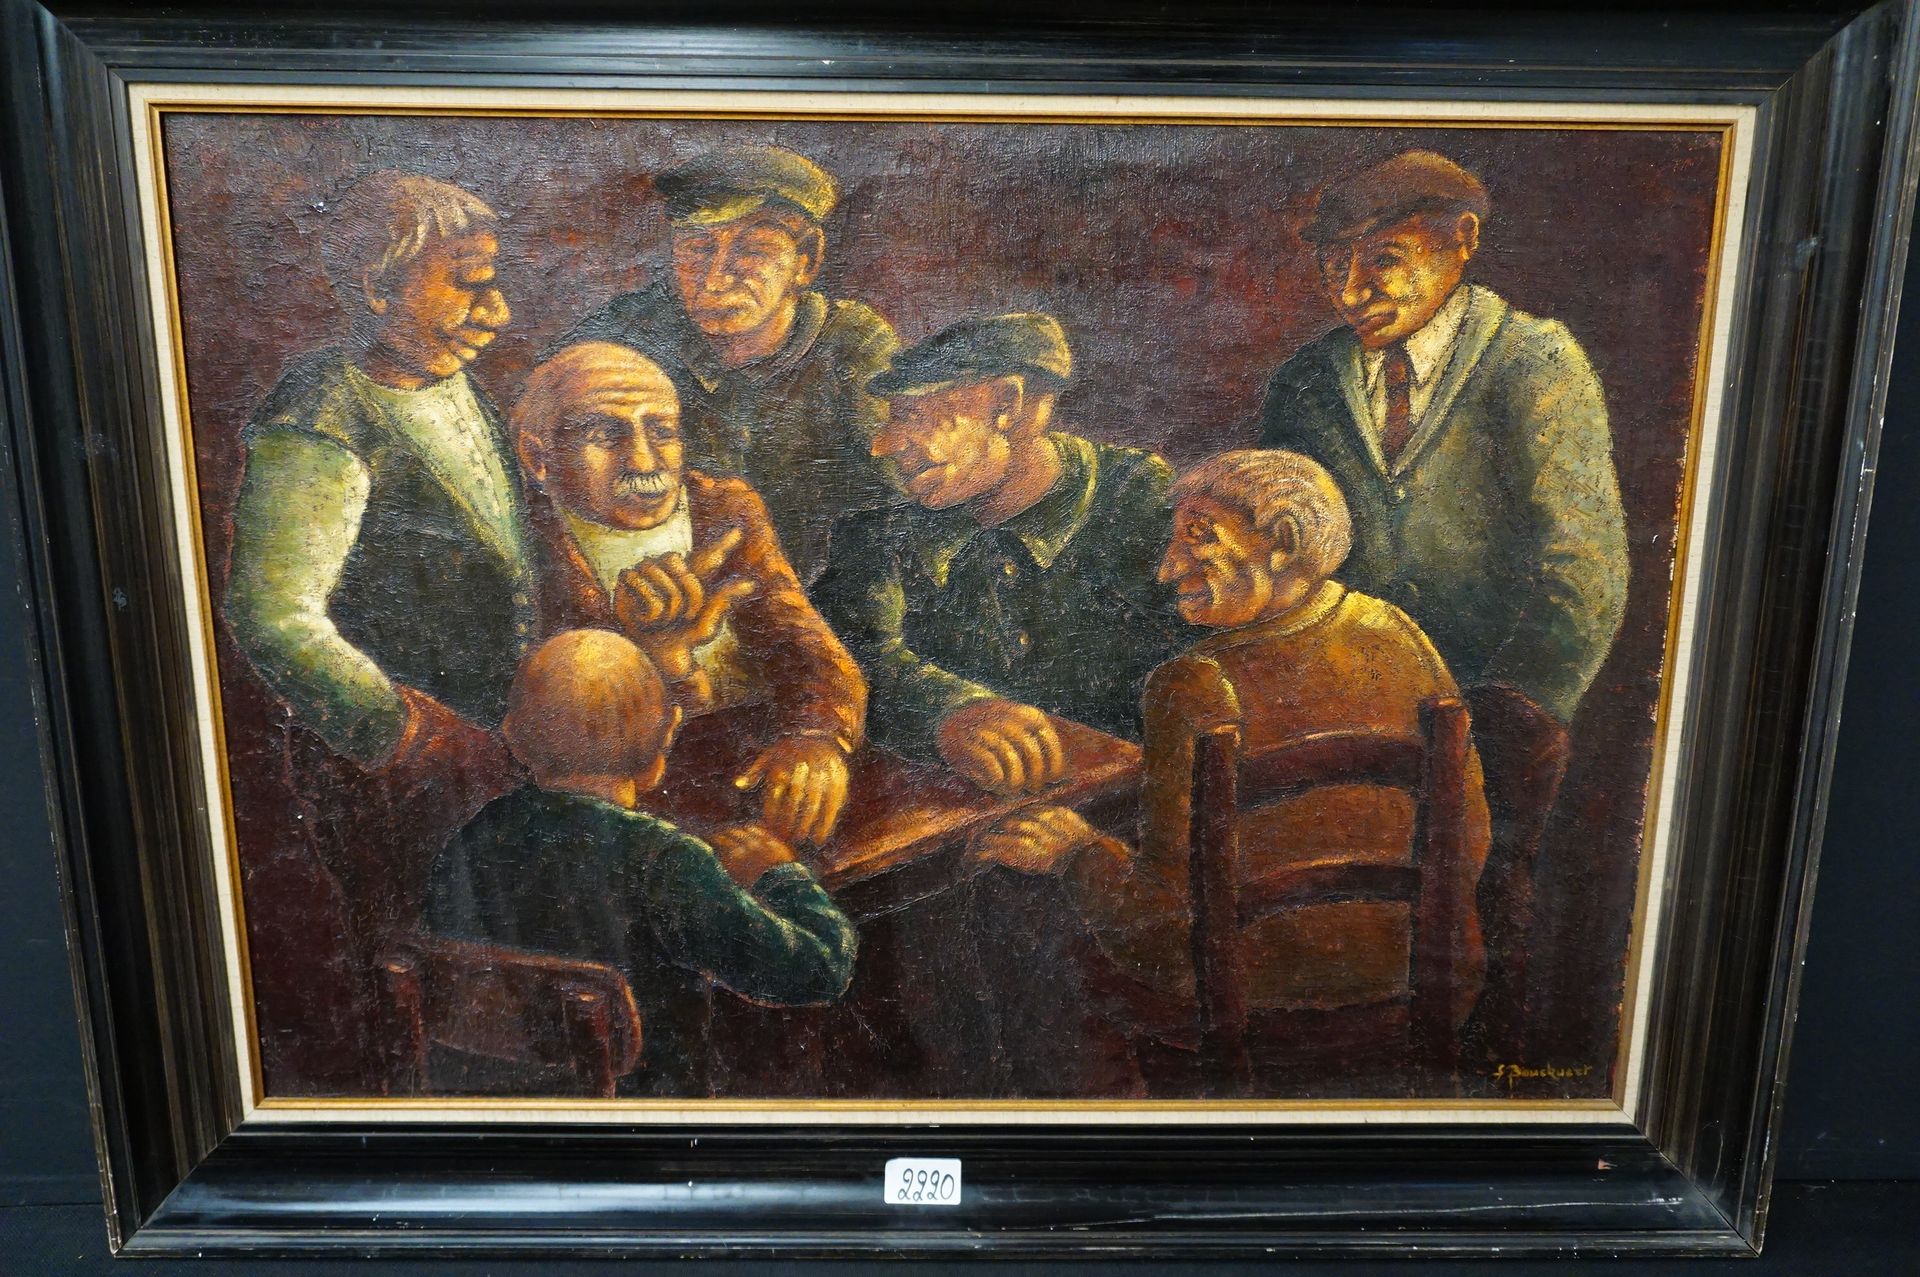 BOUCKAERT "Characters at the Inn" - Oil on canvas - Signed - 117 x 80 cm